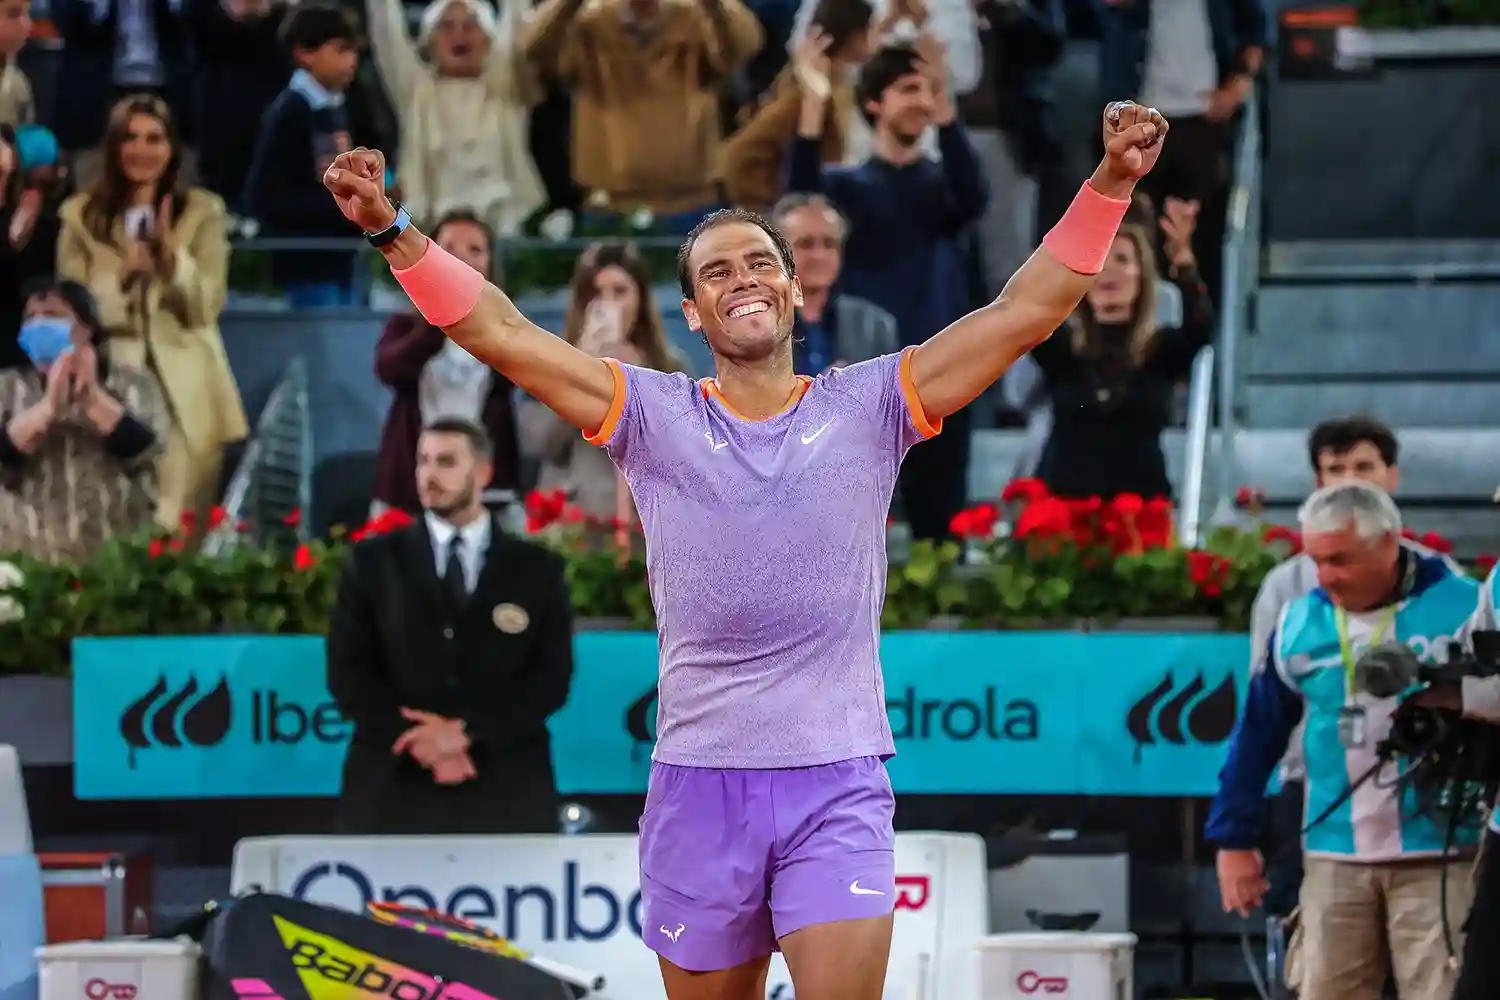 Nadal's last Madrid Open